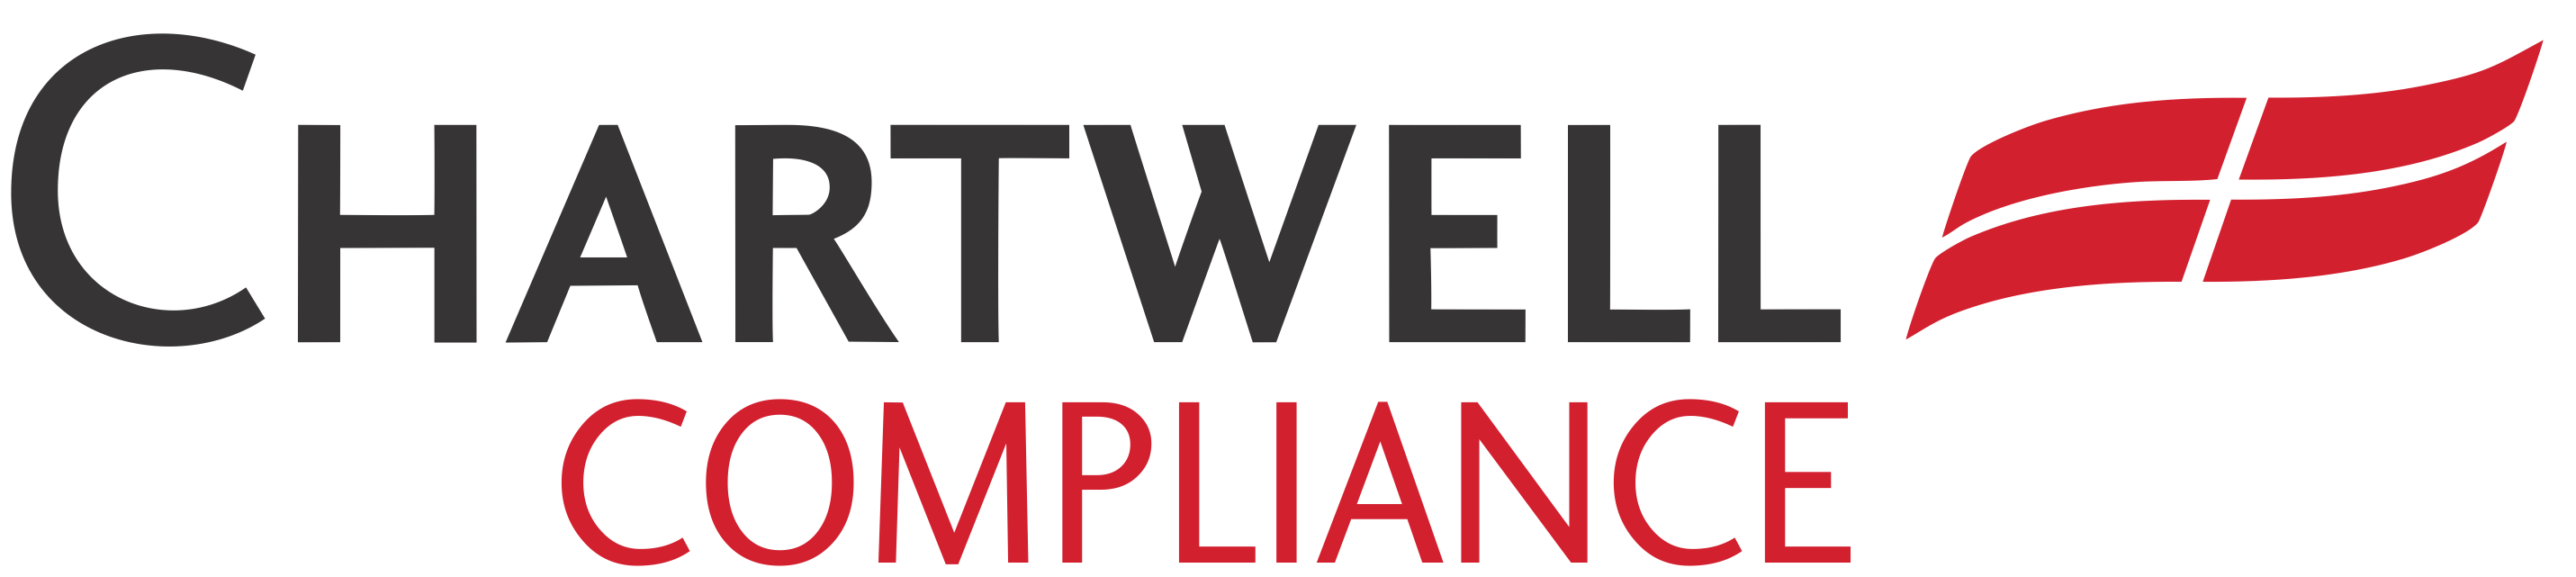 Chartwell COMPLIANCE logo